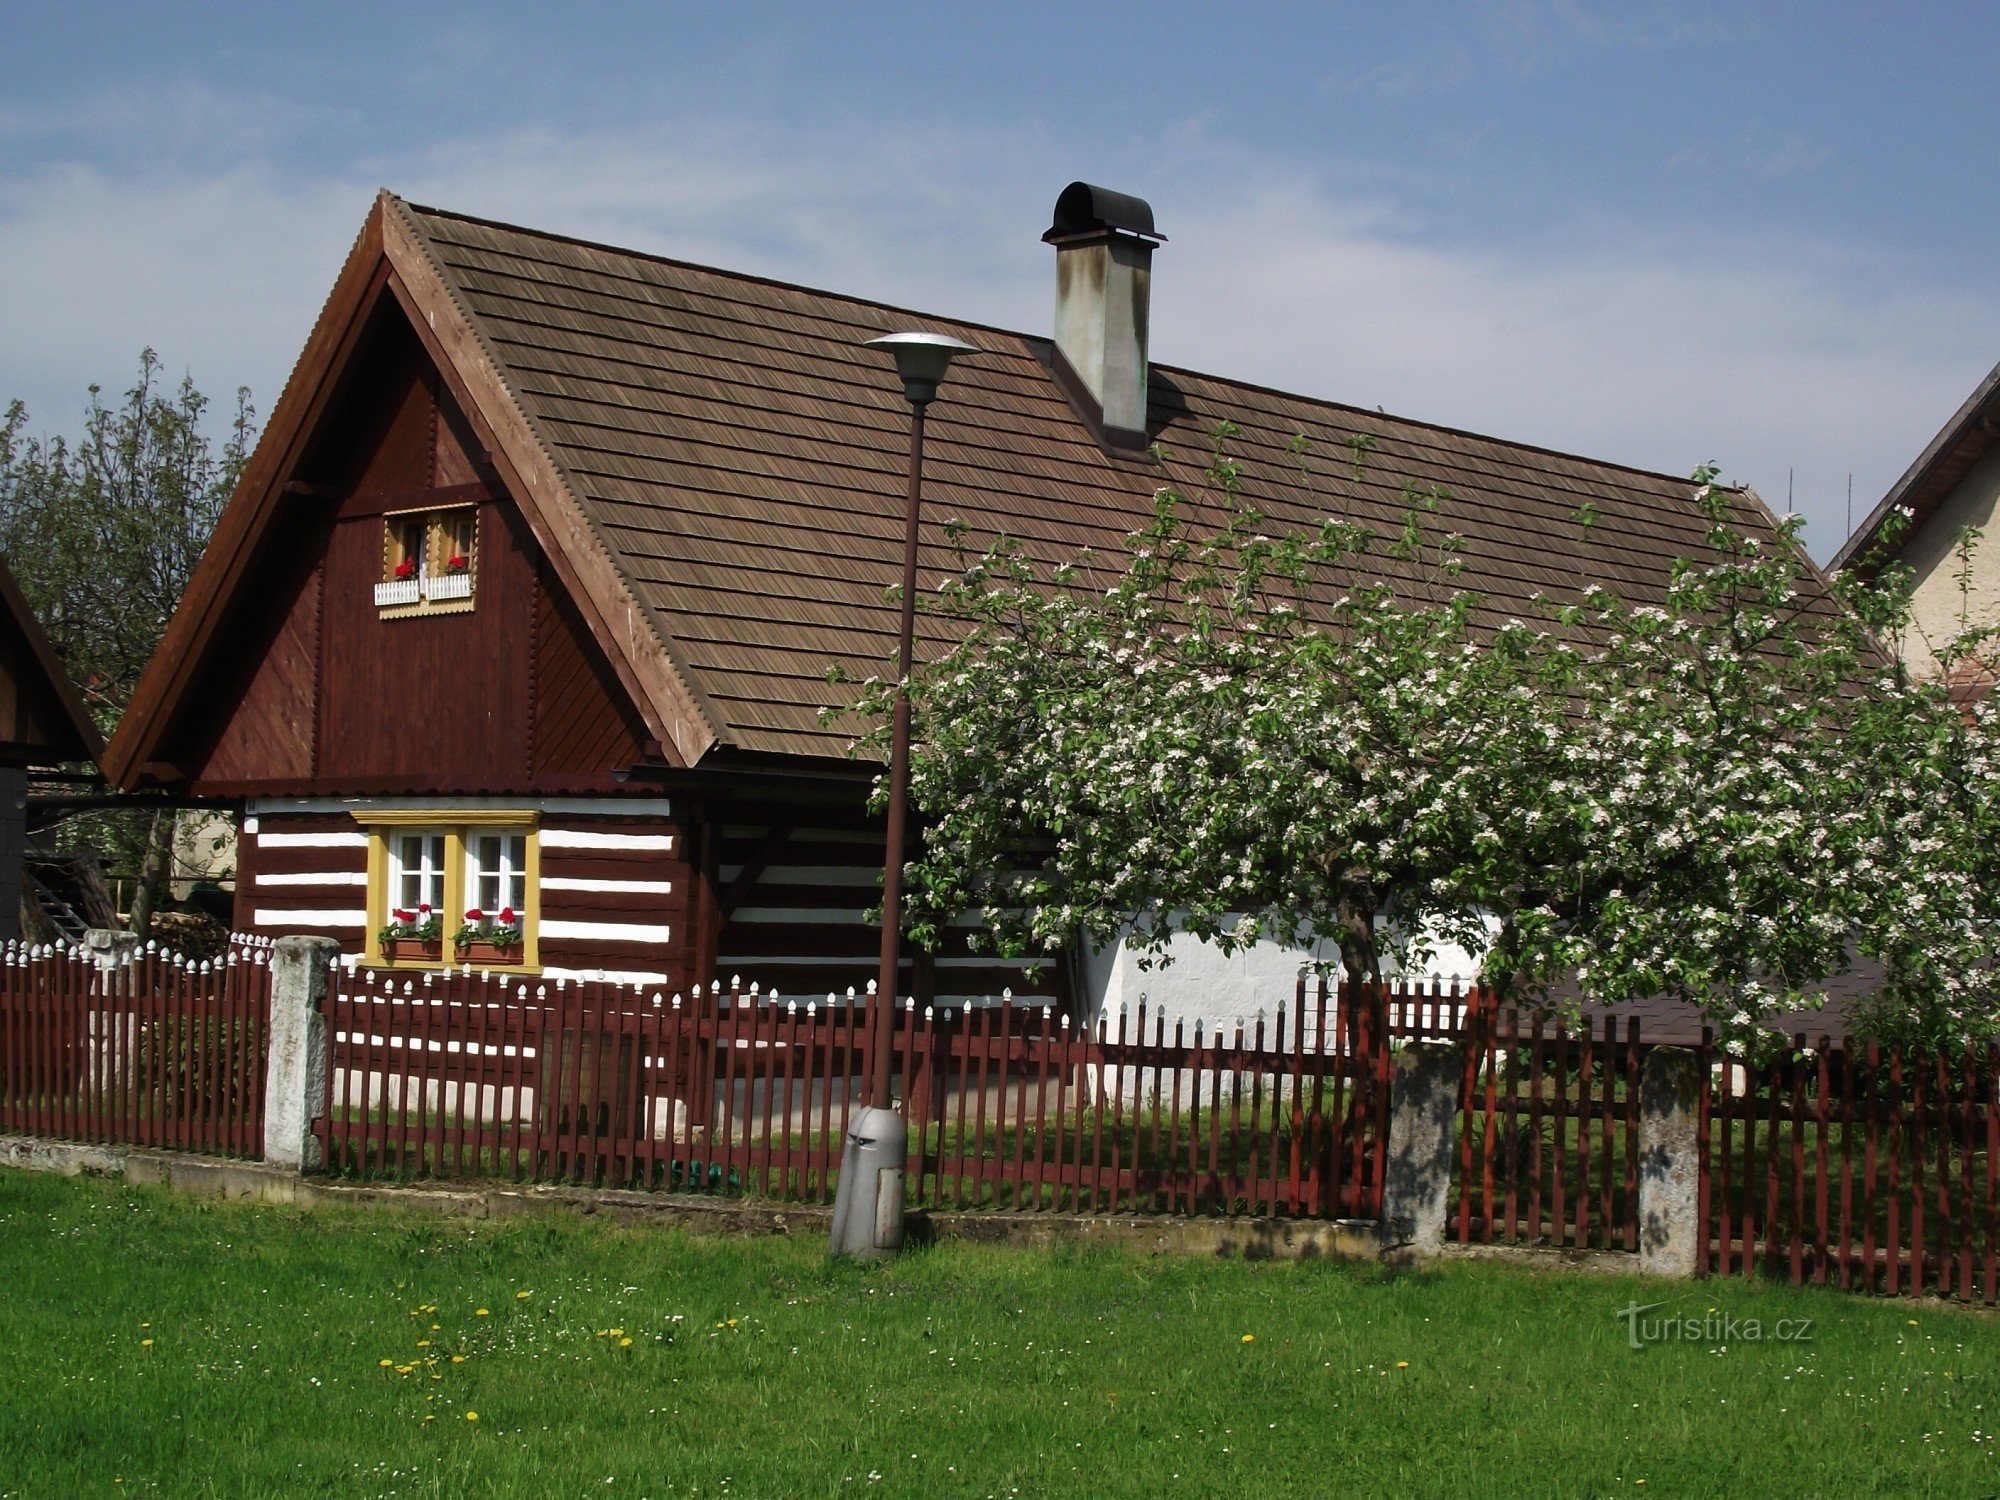 Vesec (κοντά στο Sobotka) – ένα υπαίθριο μουσείο χωριού, το Τσέχικο Χόλιγουντ και το διάσημο Liptákov